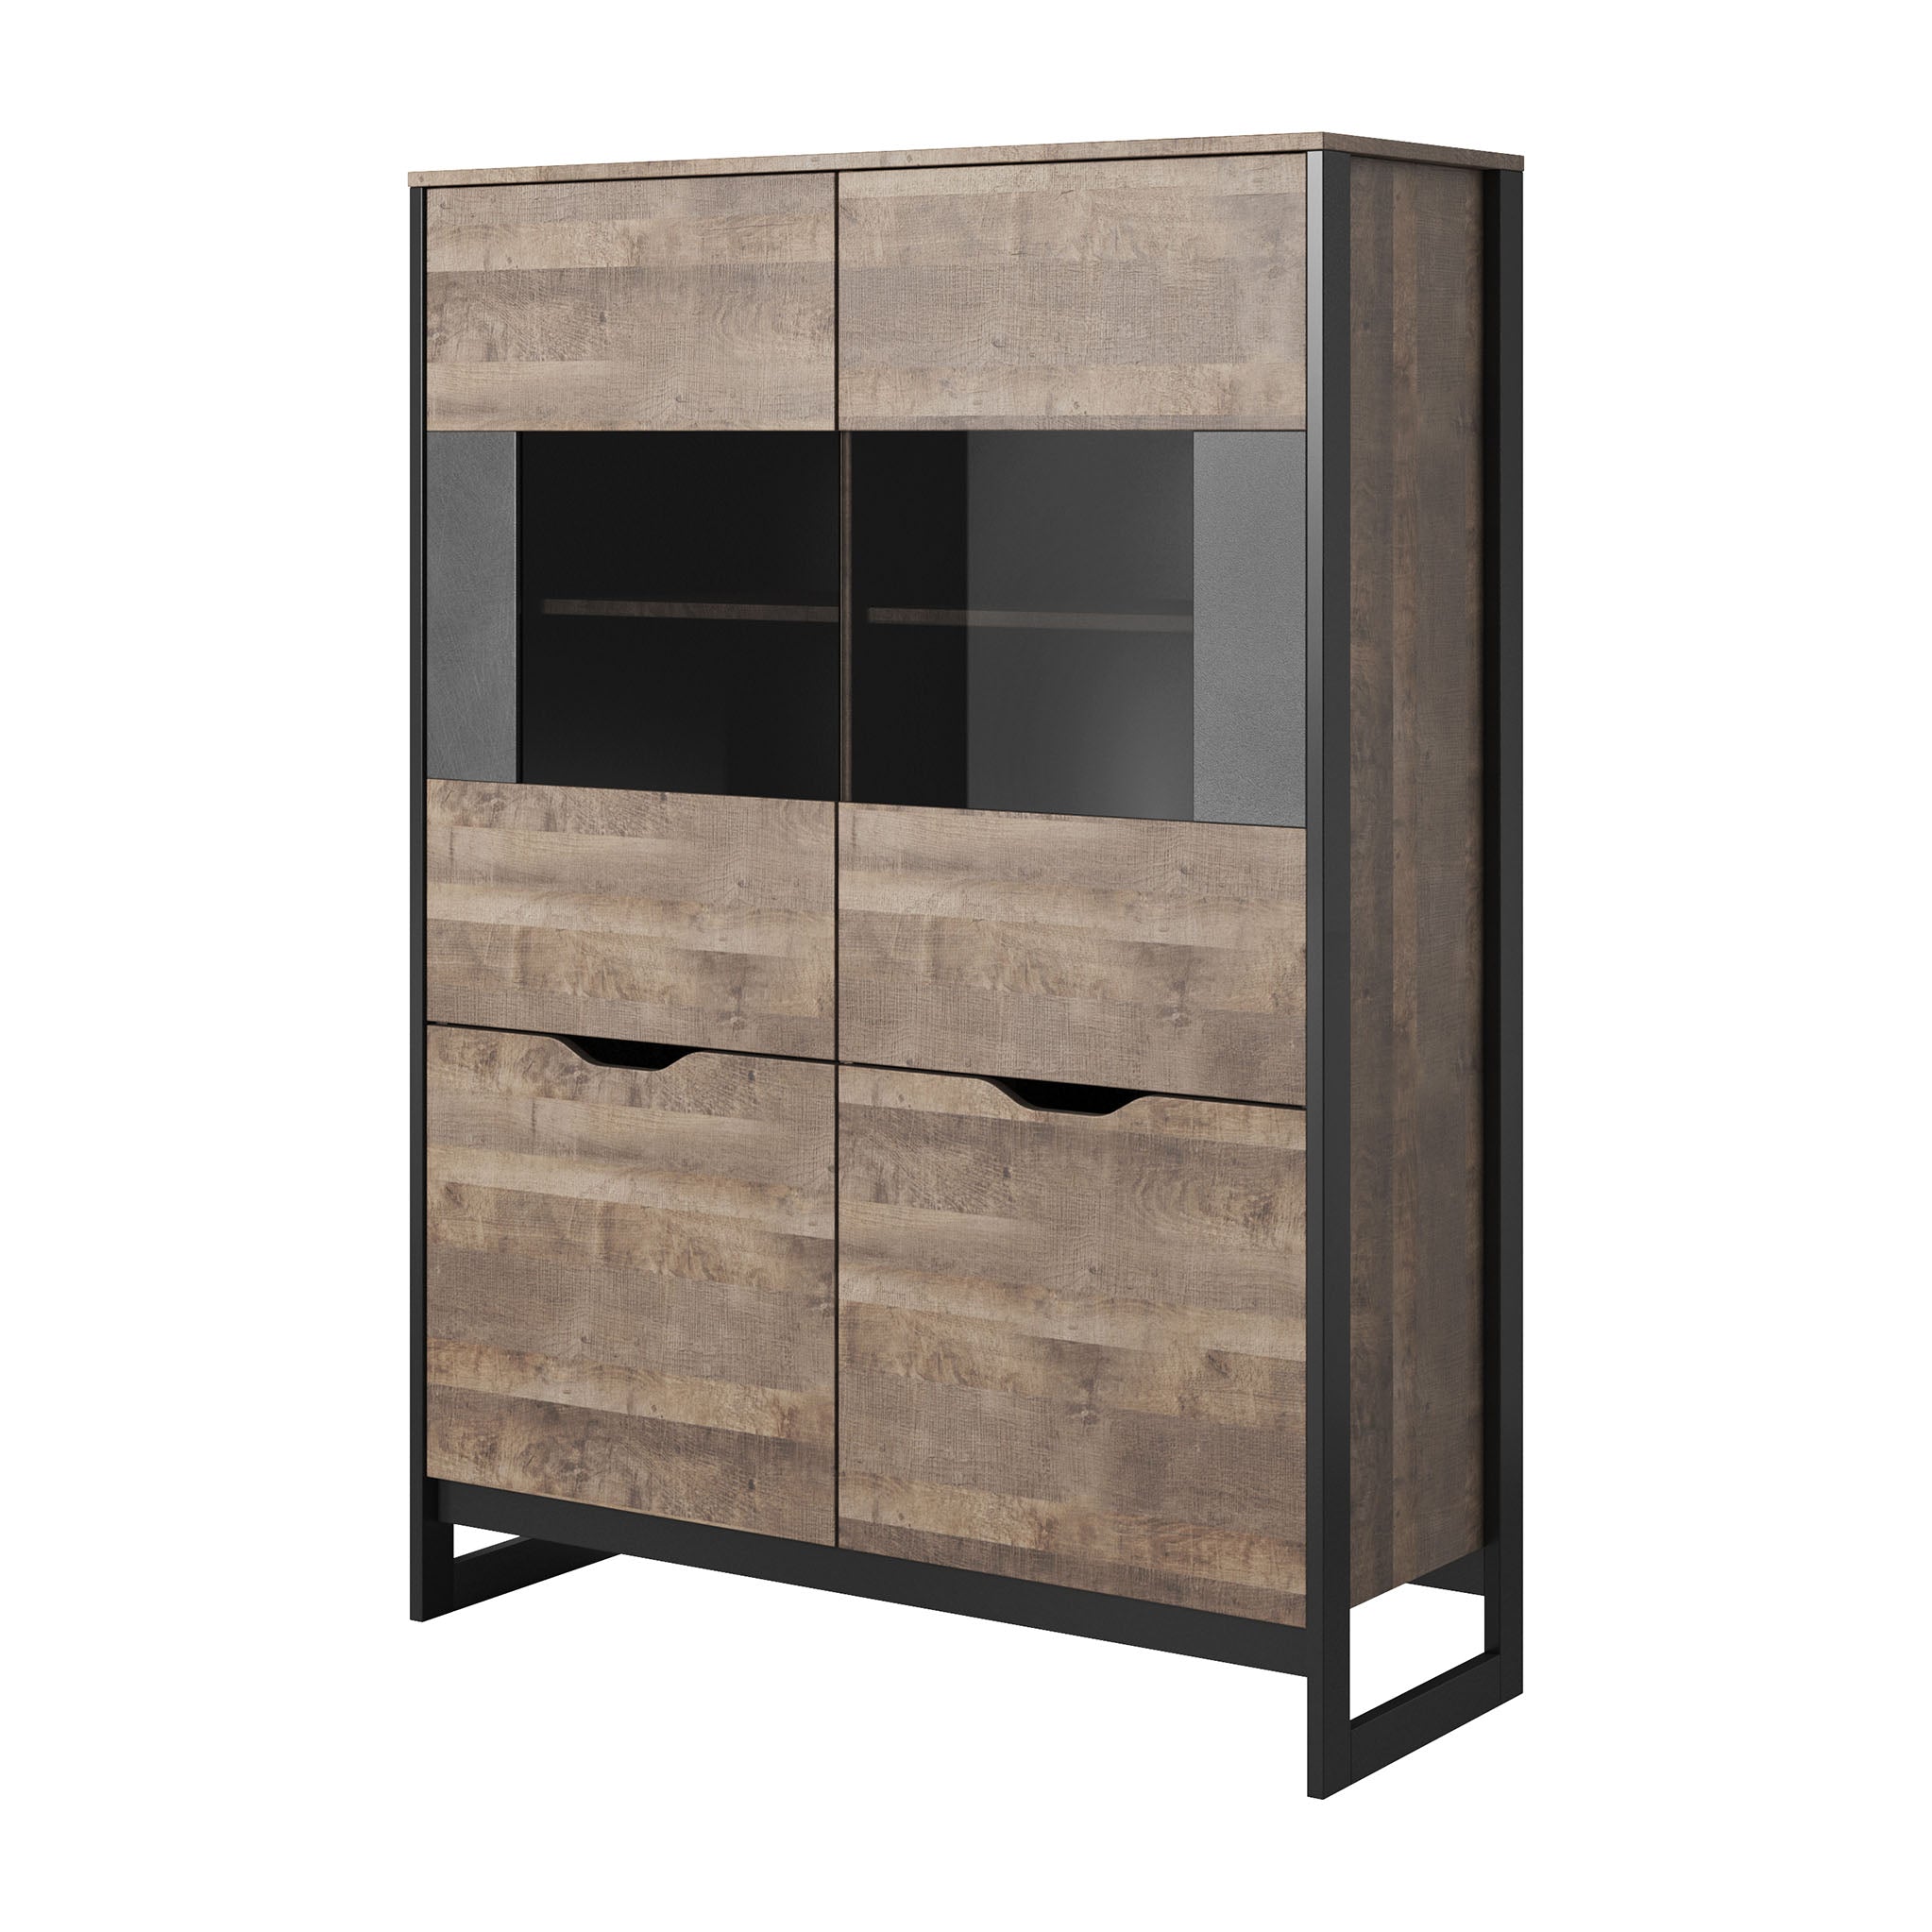 Ezra Industrial Oak Effect Display Cabinet For Living Room Or Bedroom